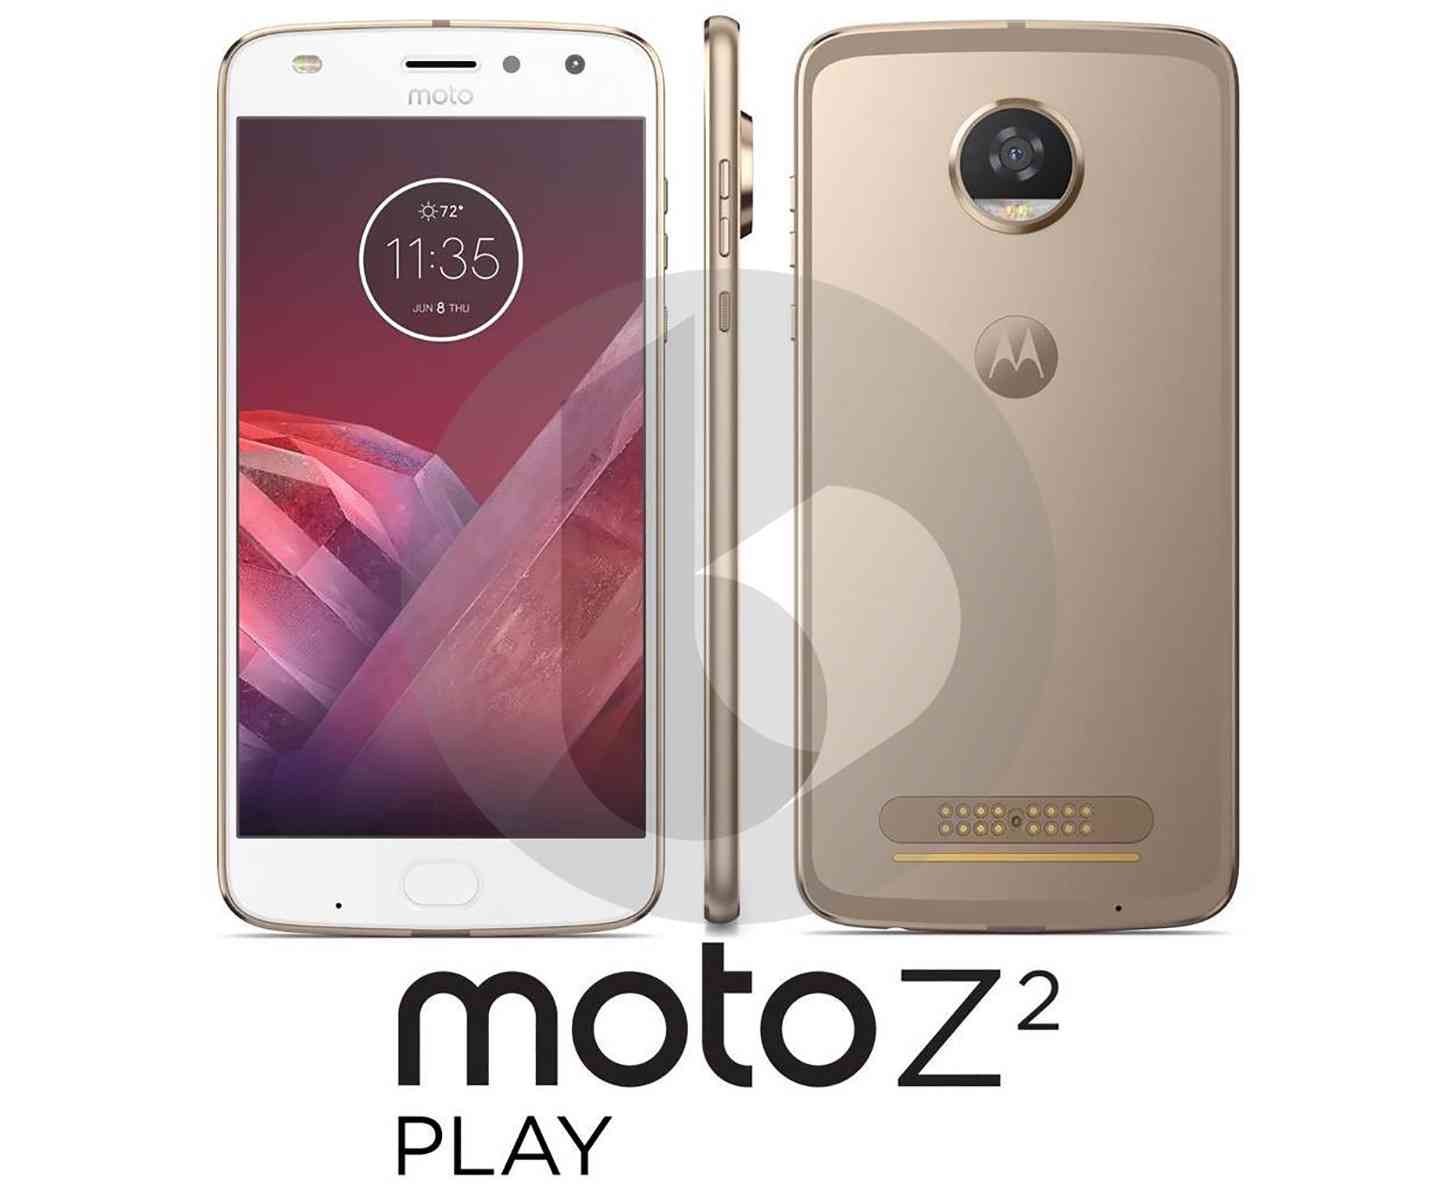 Moto Z2 Play image leak